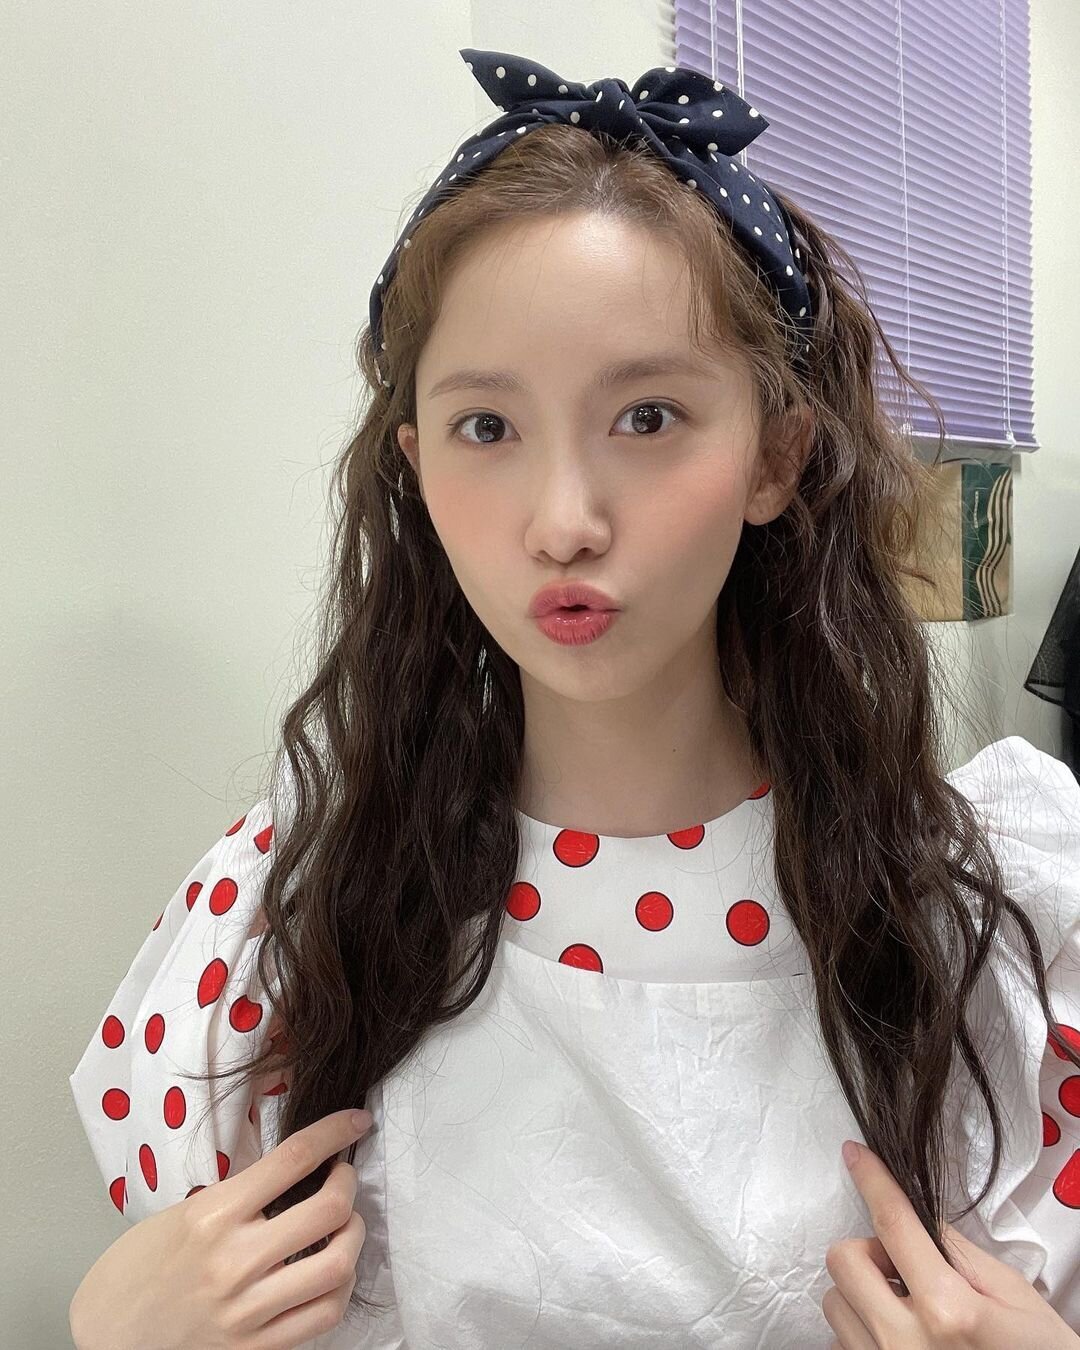 221013 SNSD Yoona Instagram Update | kpopping